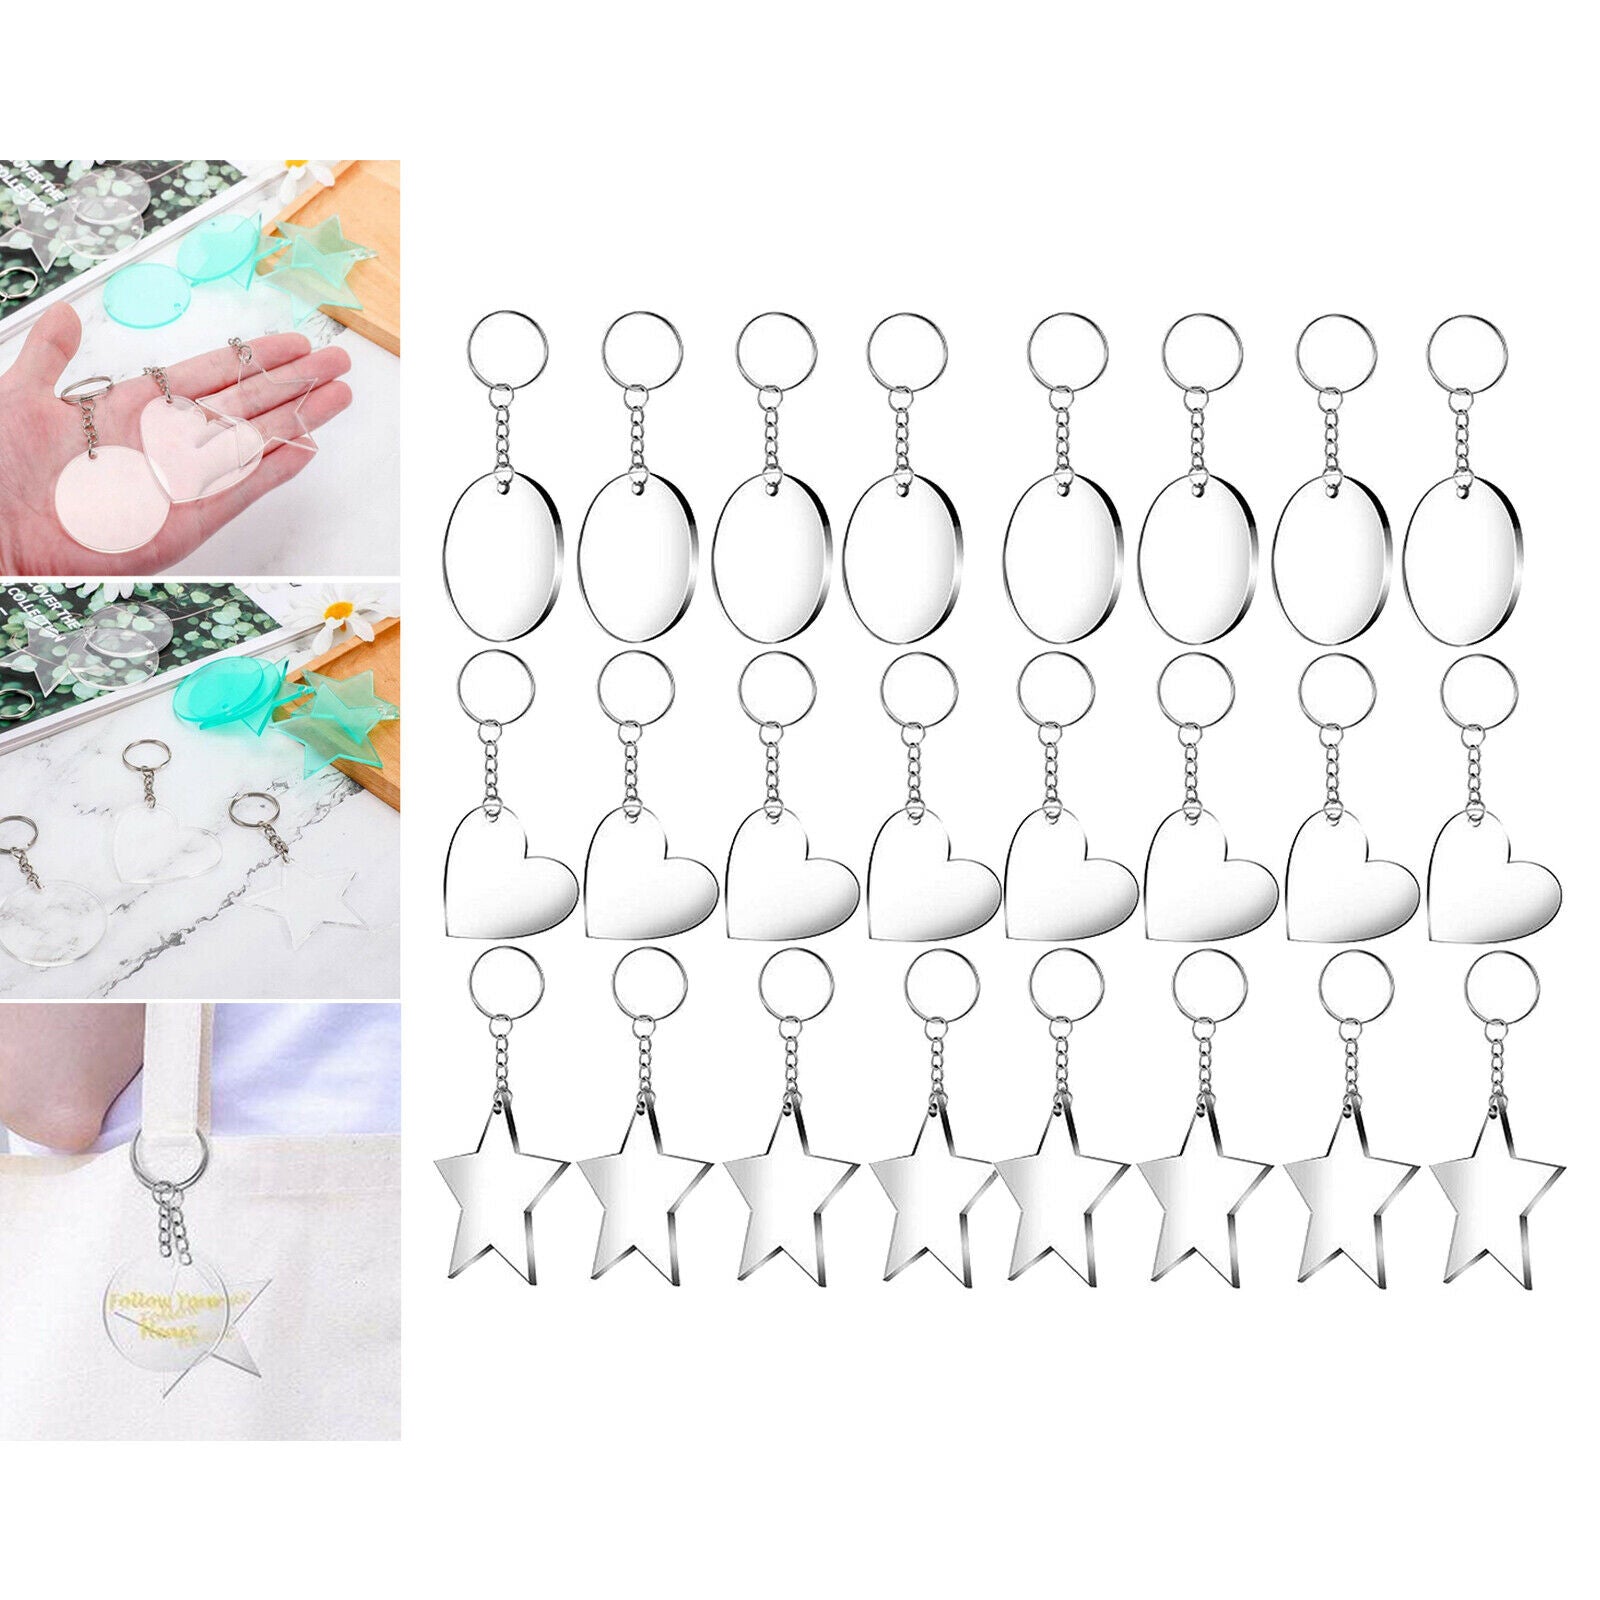 24pcs Acrylic Clear Discs Blanks Keychain with Tassels Pendants Set DIY Craft